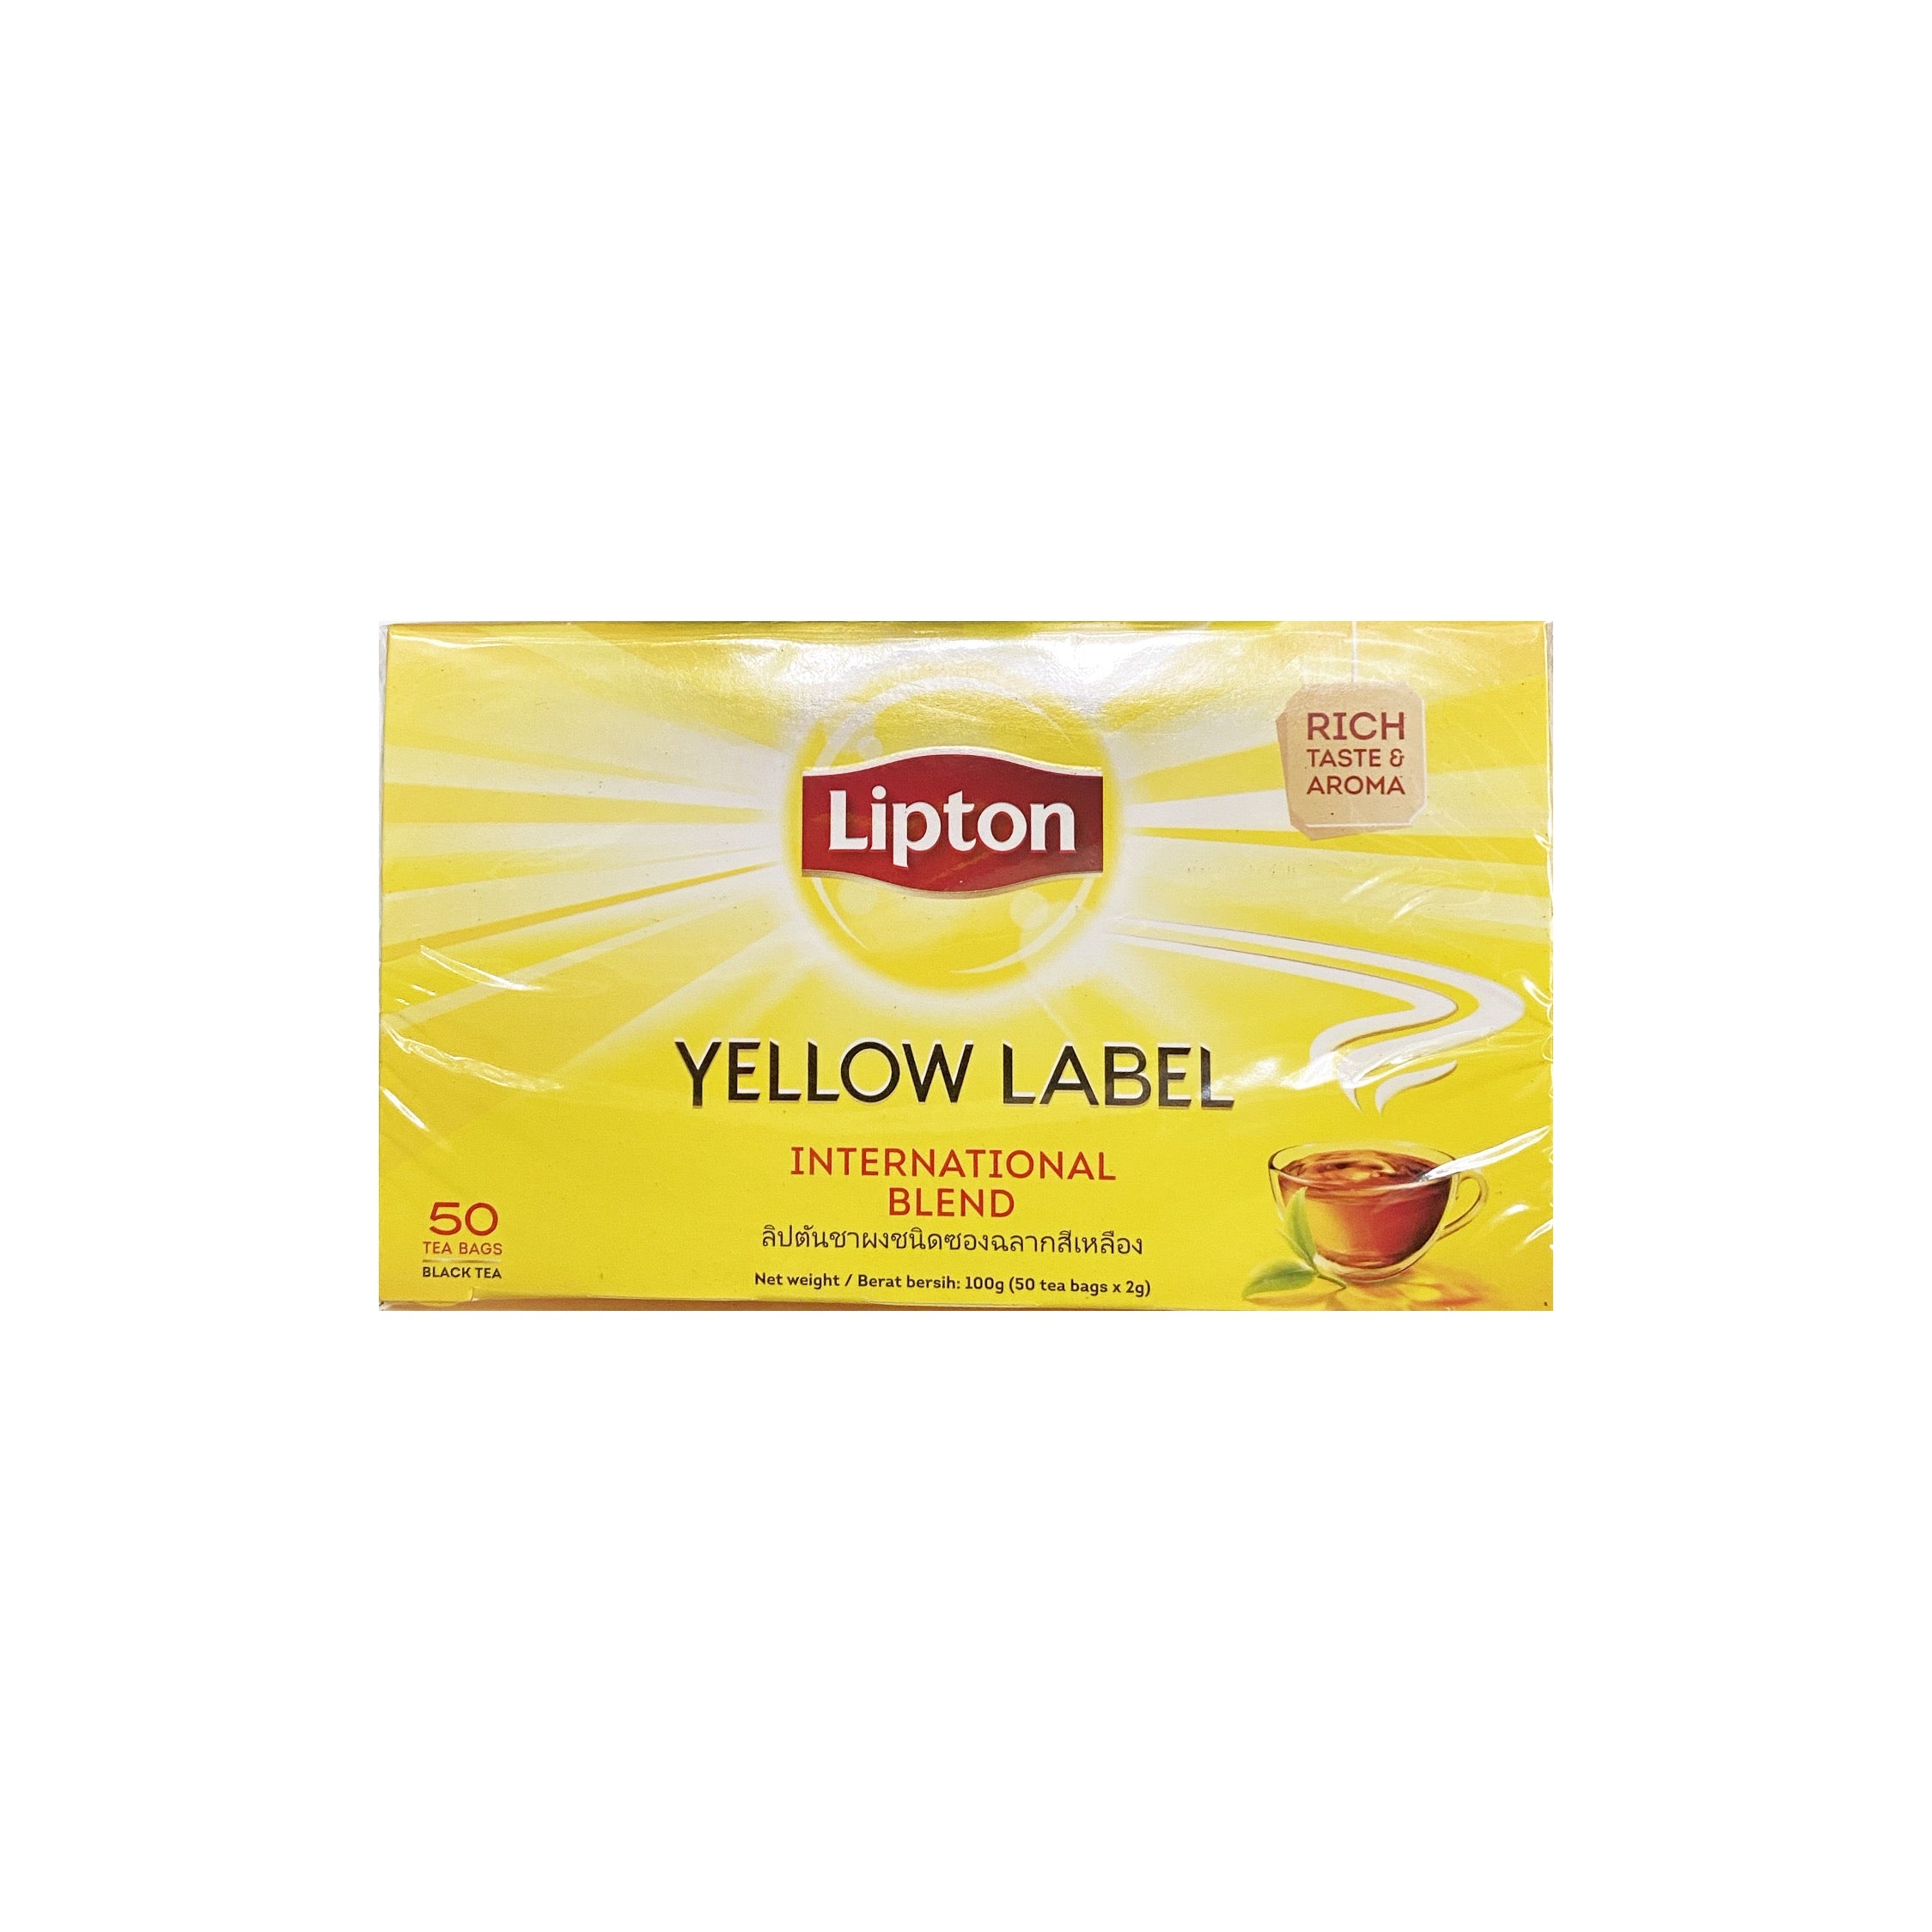 Lipton Yellow Label Finest Tea Blend, Black Tea (100 Tea Bags) - 200g  Unflavoured Tea Blend Bags Box Price in India - Buy Lipton Yellow Label  Finest Tea Blend, Black Tea (100